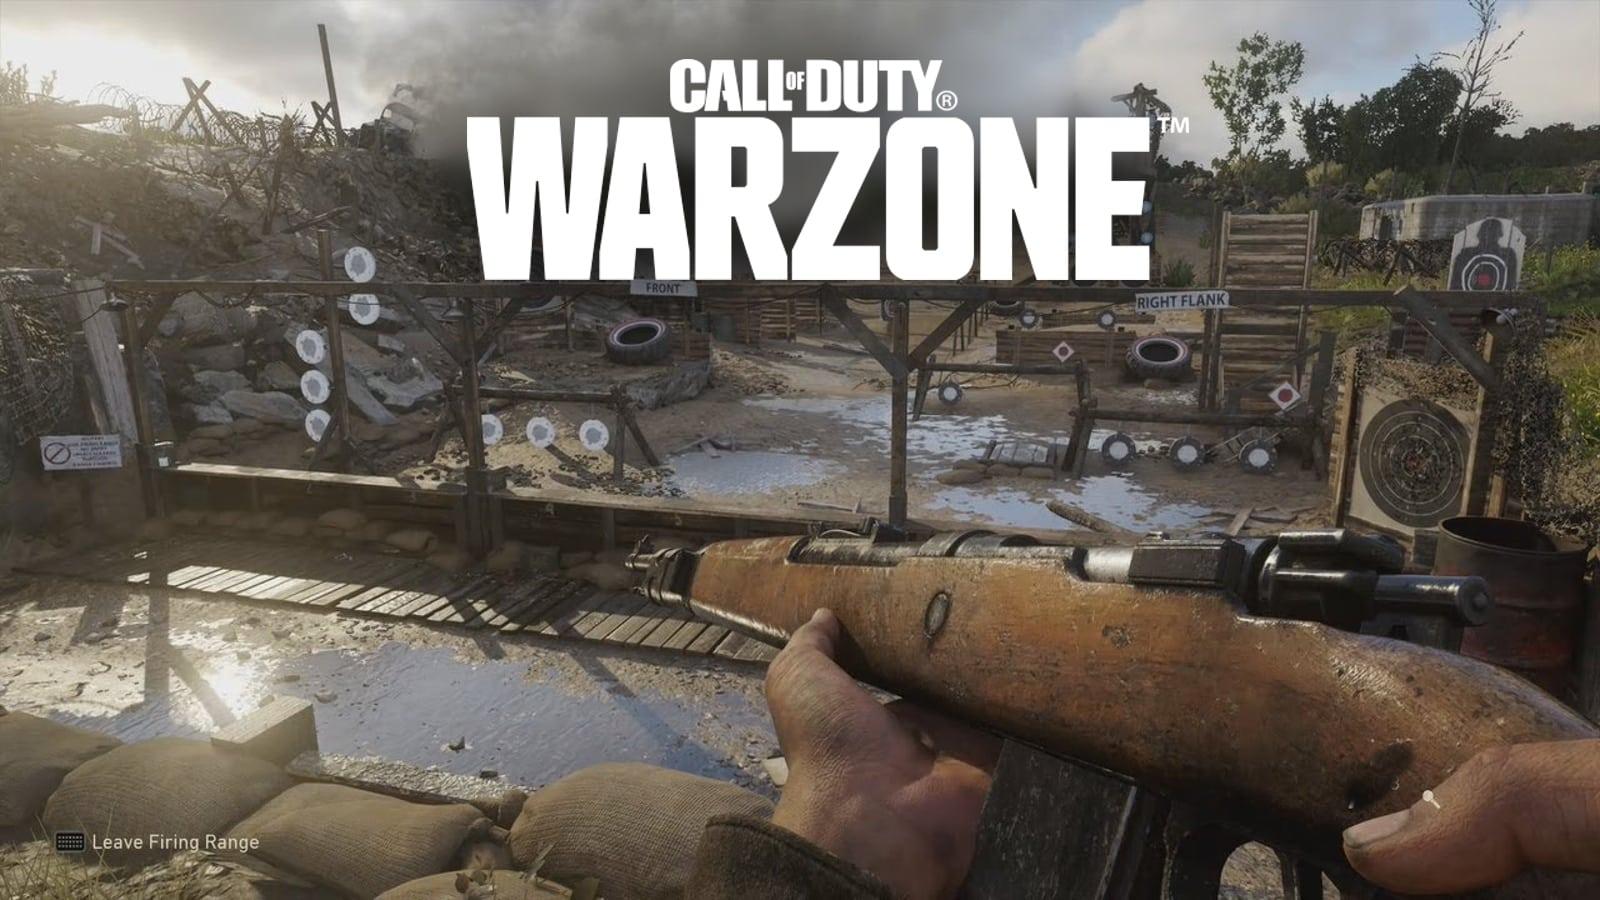 Warzone CoD WW2 firing range